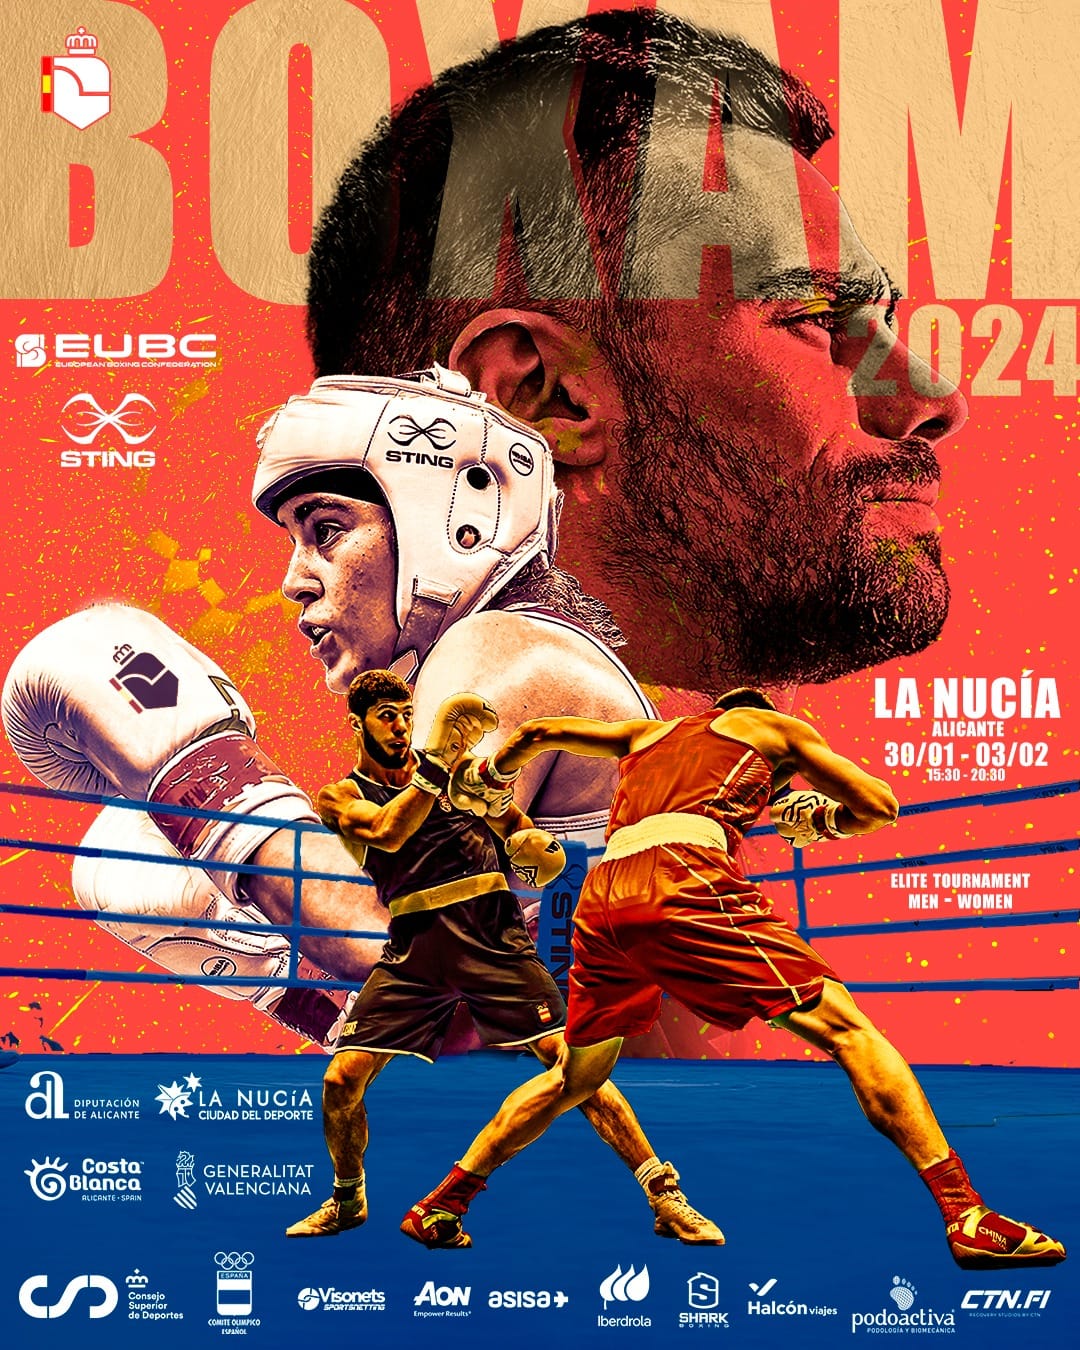 Italia Boxing Team Elite prenderà parte al Boxam 2024 